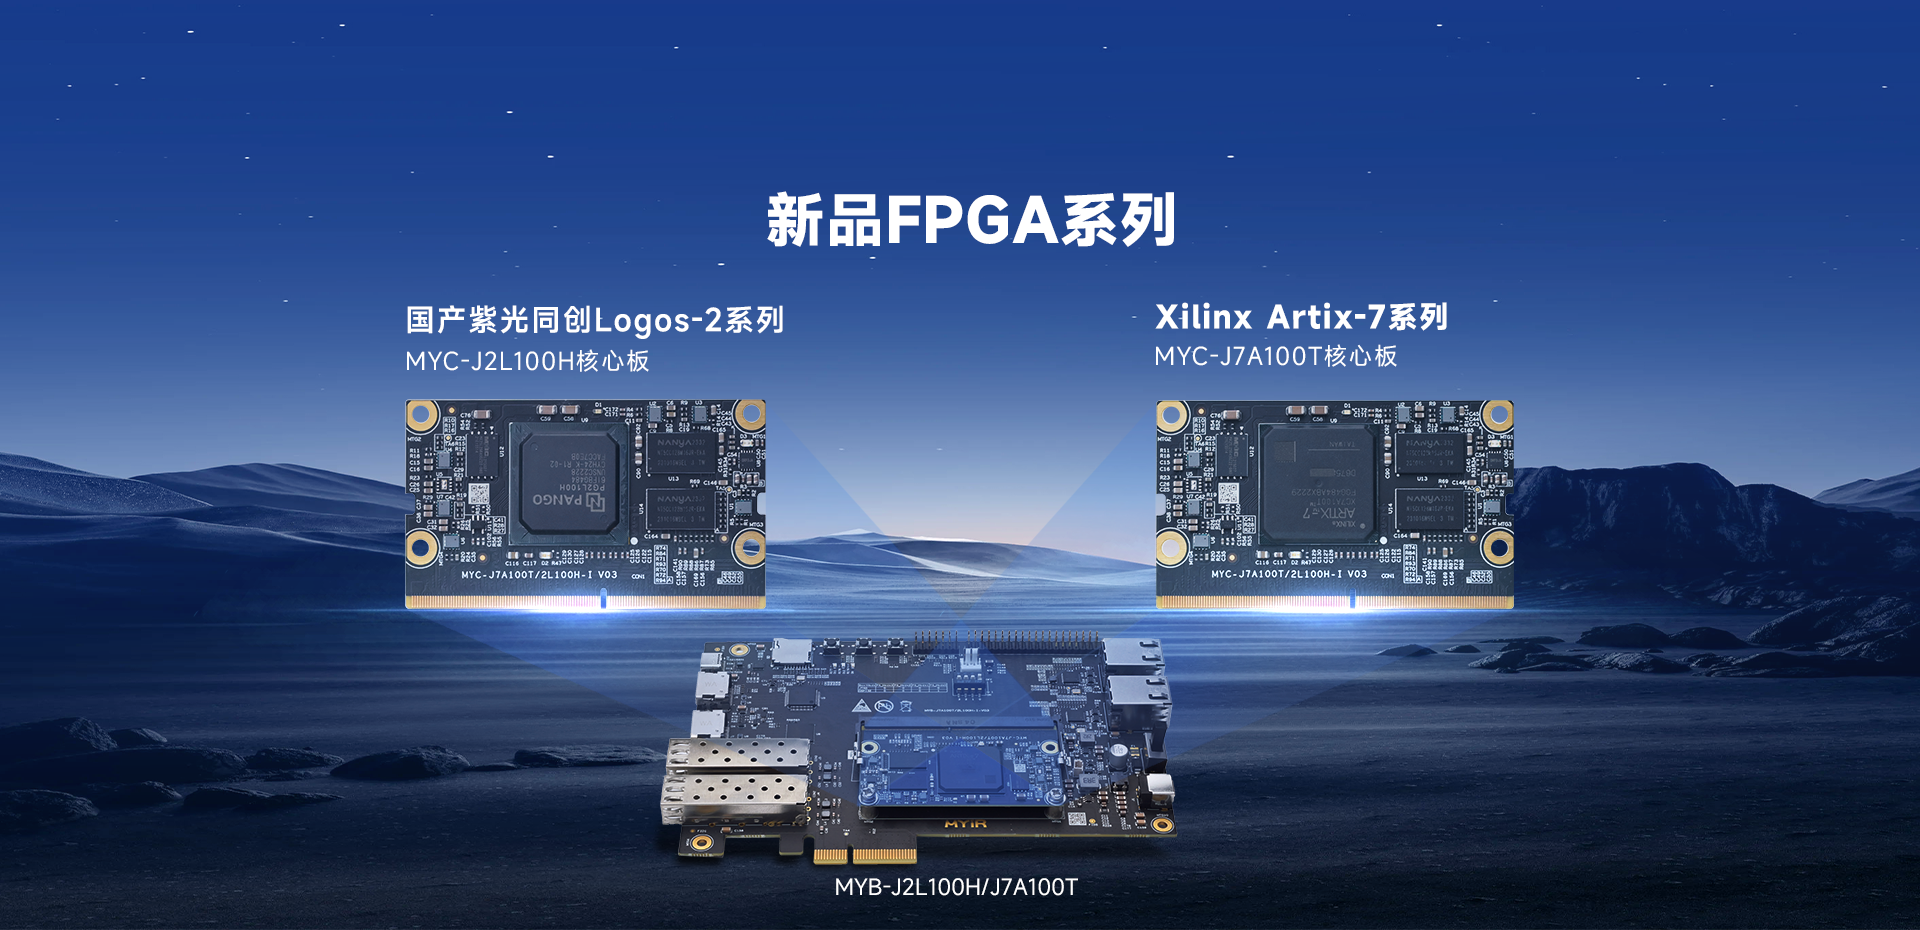 新品FPGA